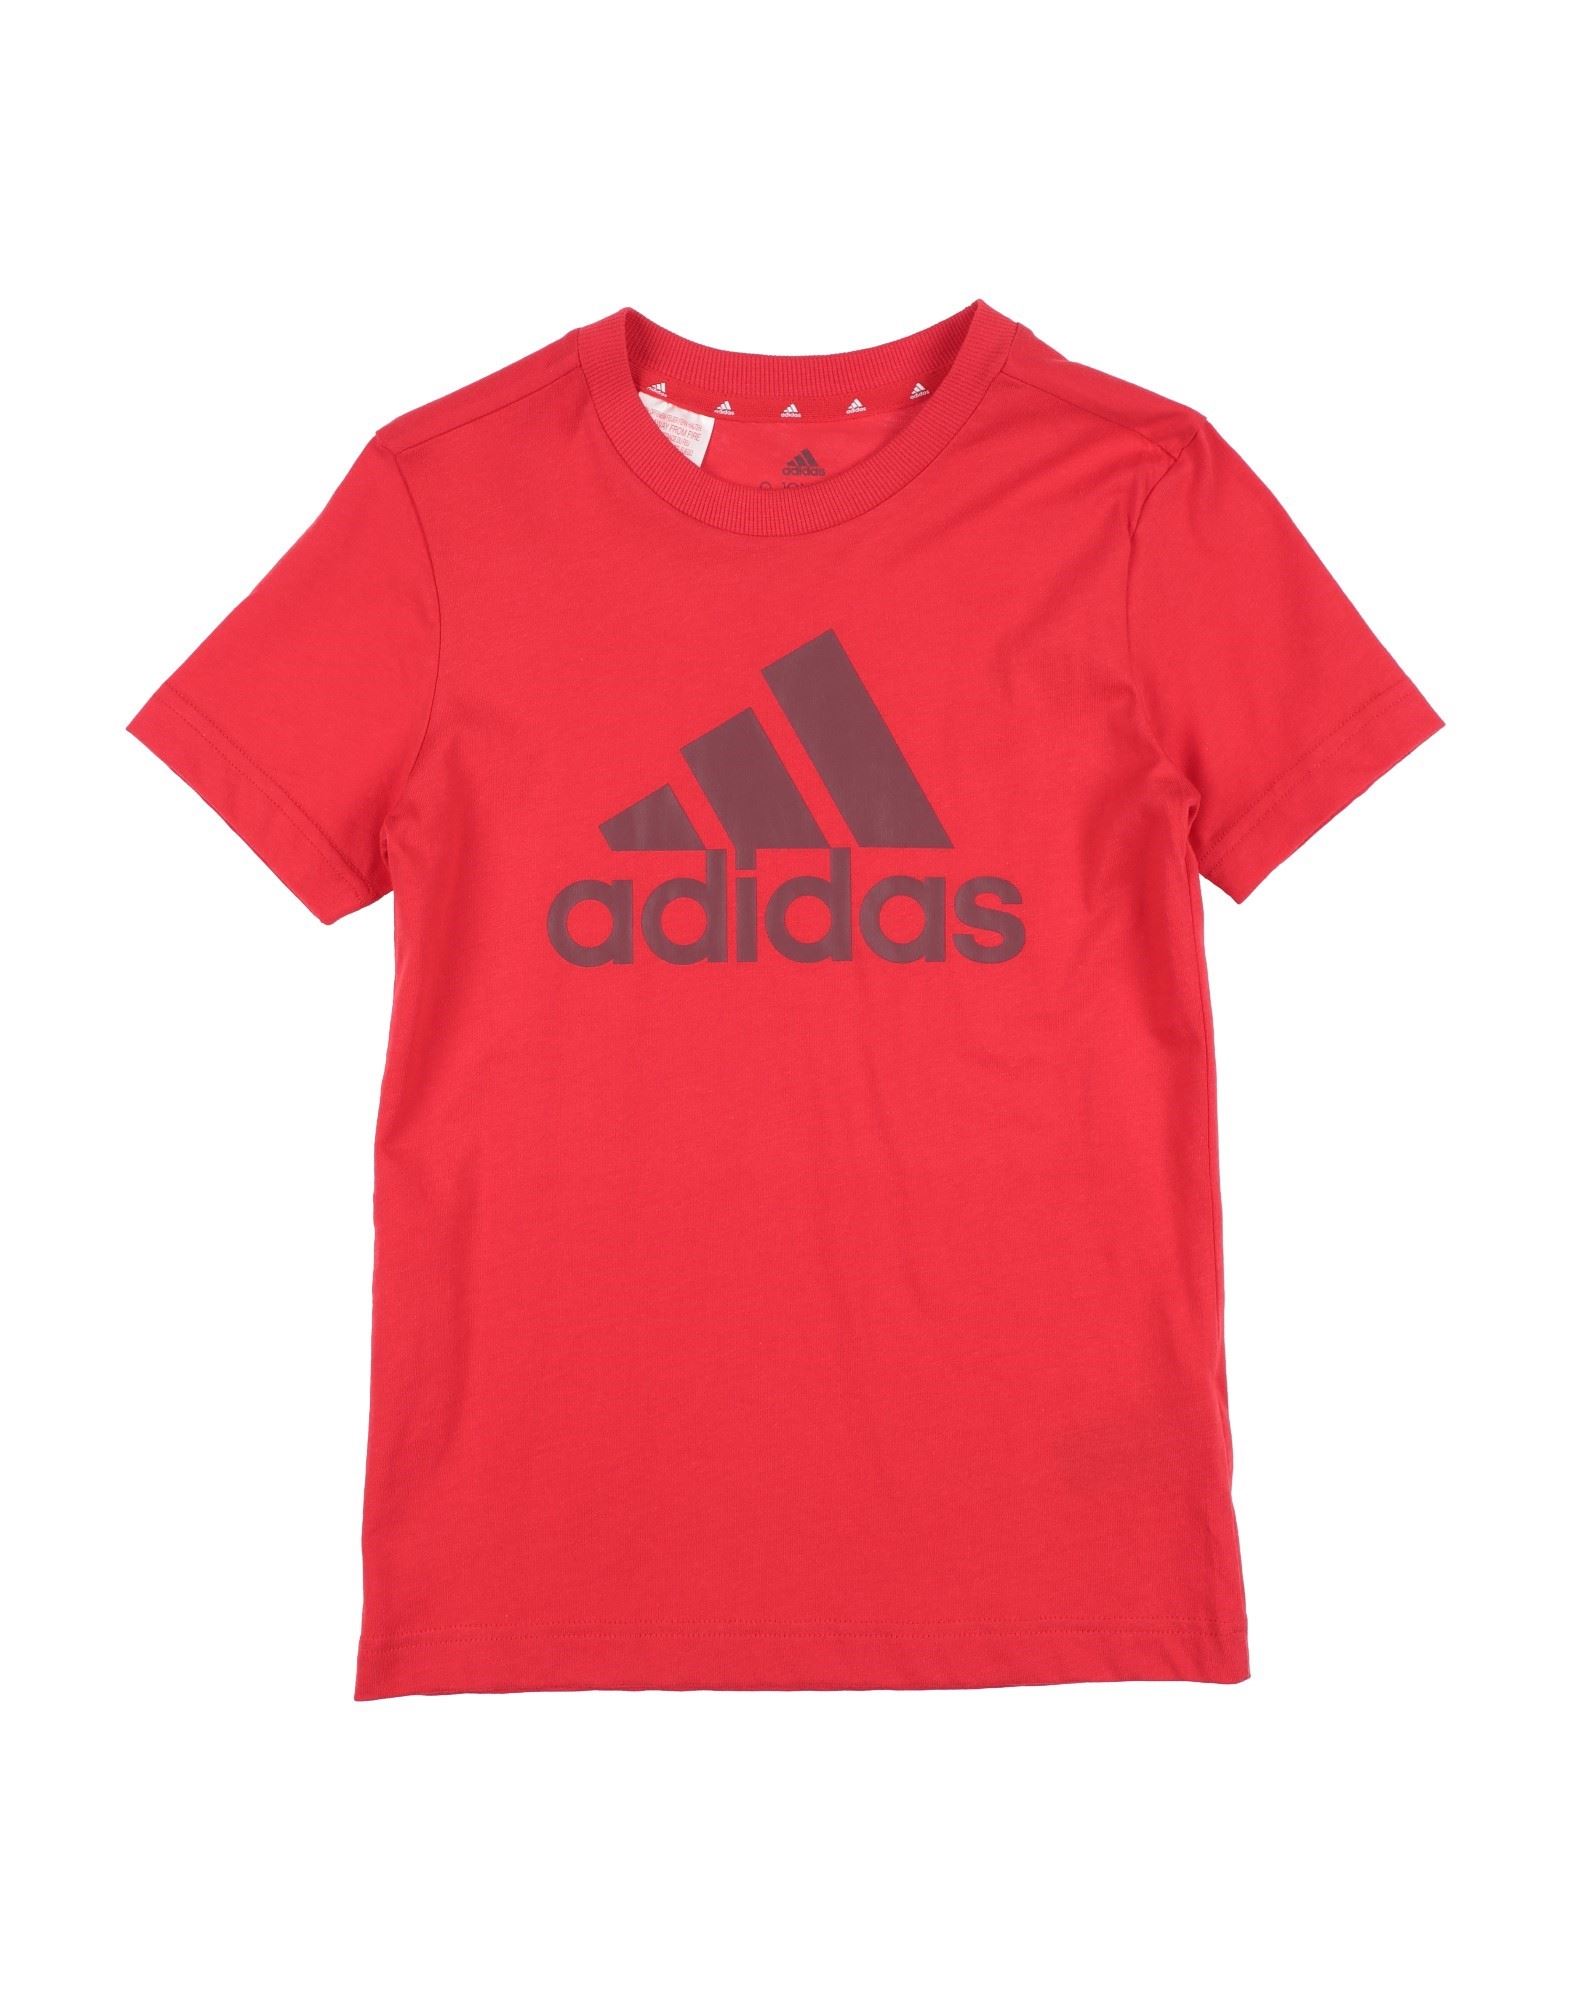 Adidas Originals Kids' Adidas T-shirts In Red